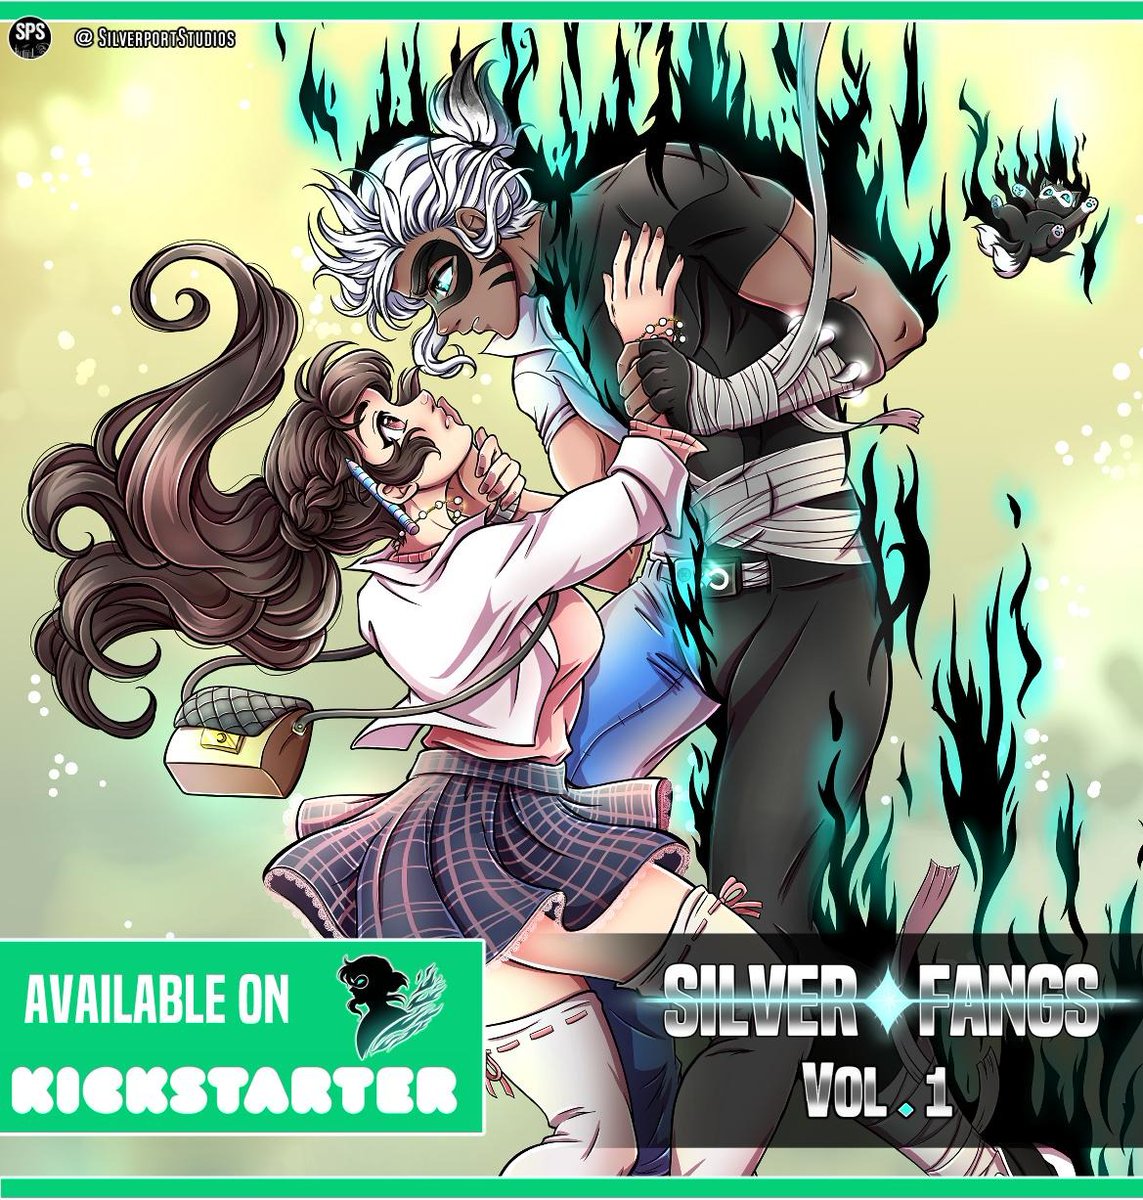 200+ Page Comic Book
@Kickstarter
Read Chapter 1 for FREE
Links in Bio

#kickstartercampaign #crowdfundingcampaign  #indiecomics #freecomicbookday #comicbookart  #webtoon #crowdfundingproject #superhero